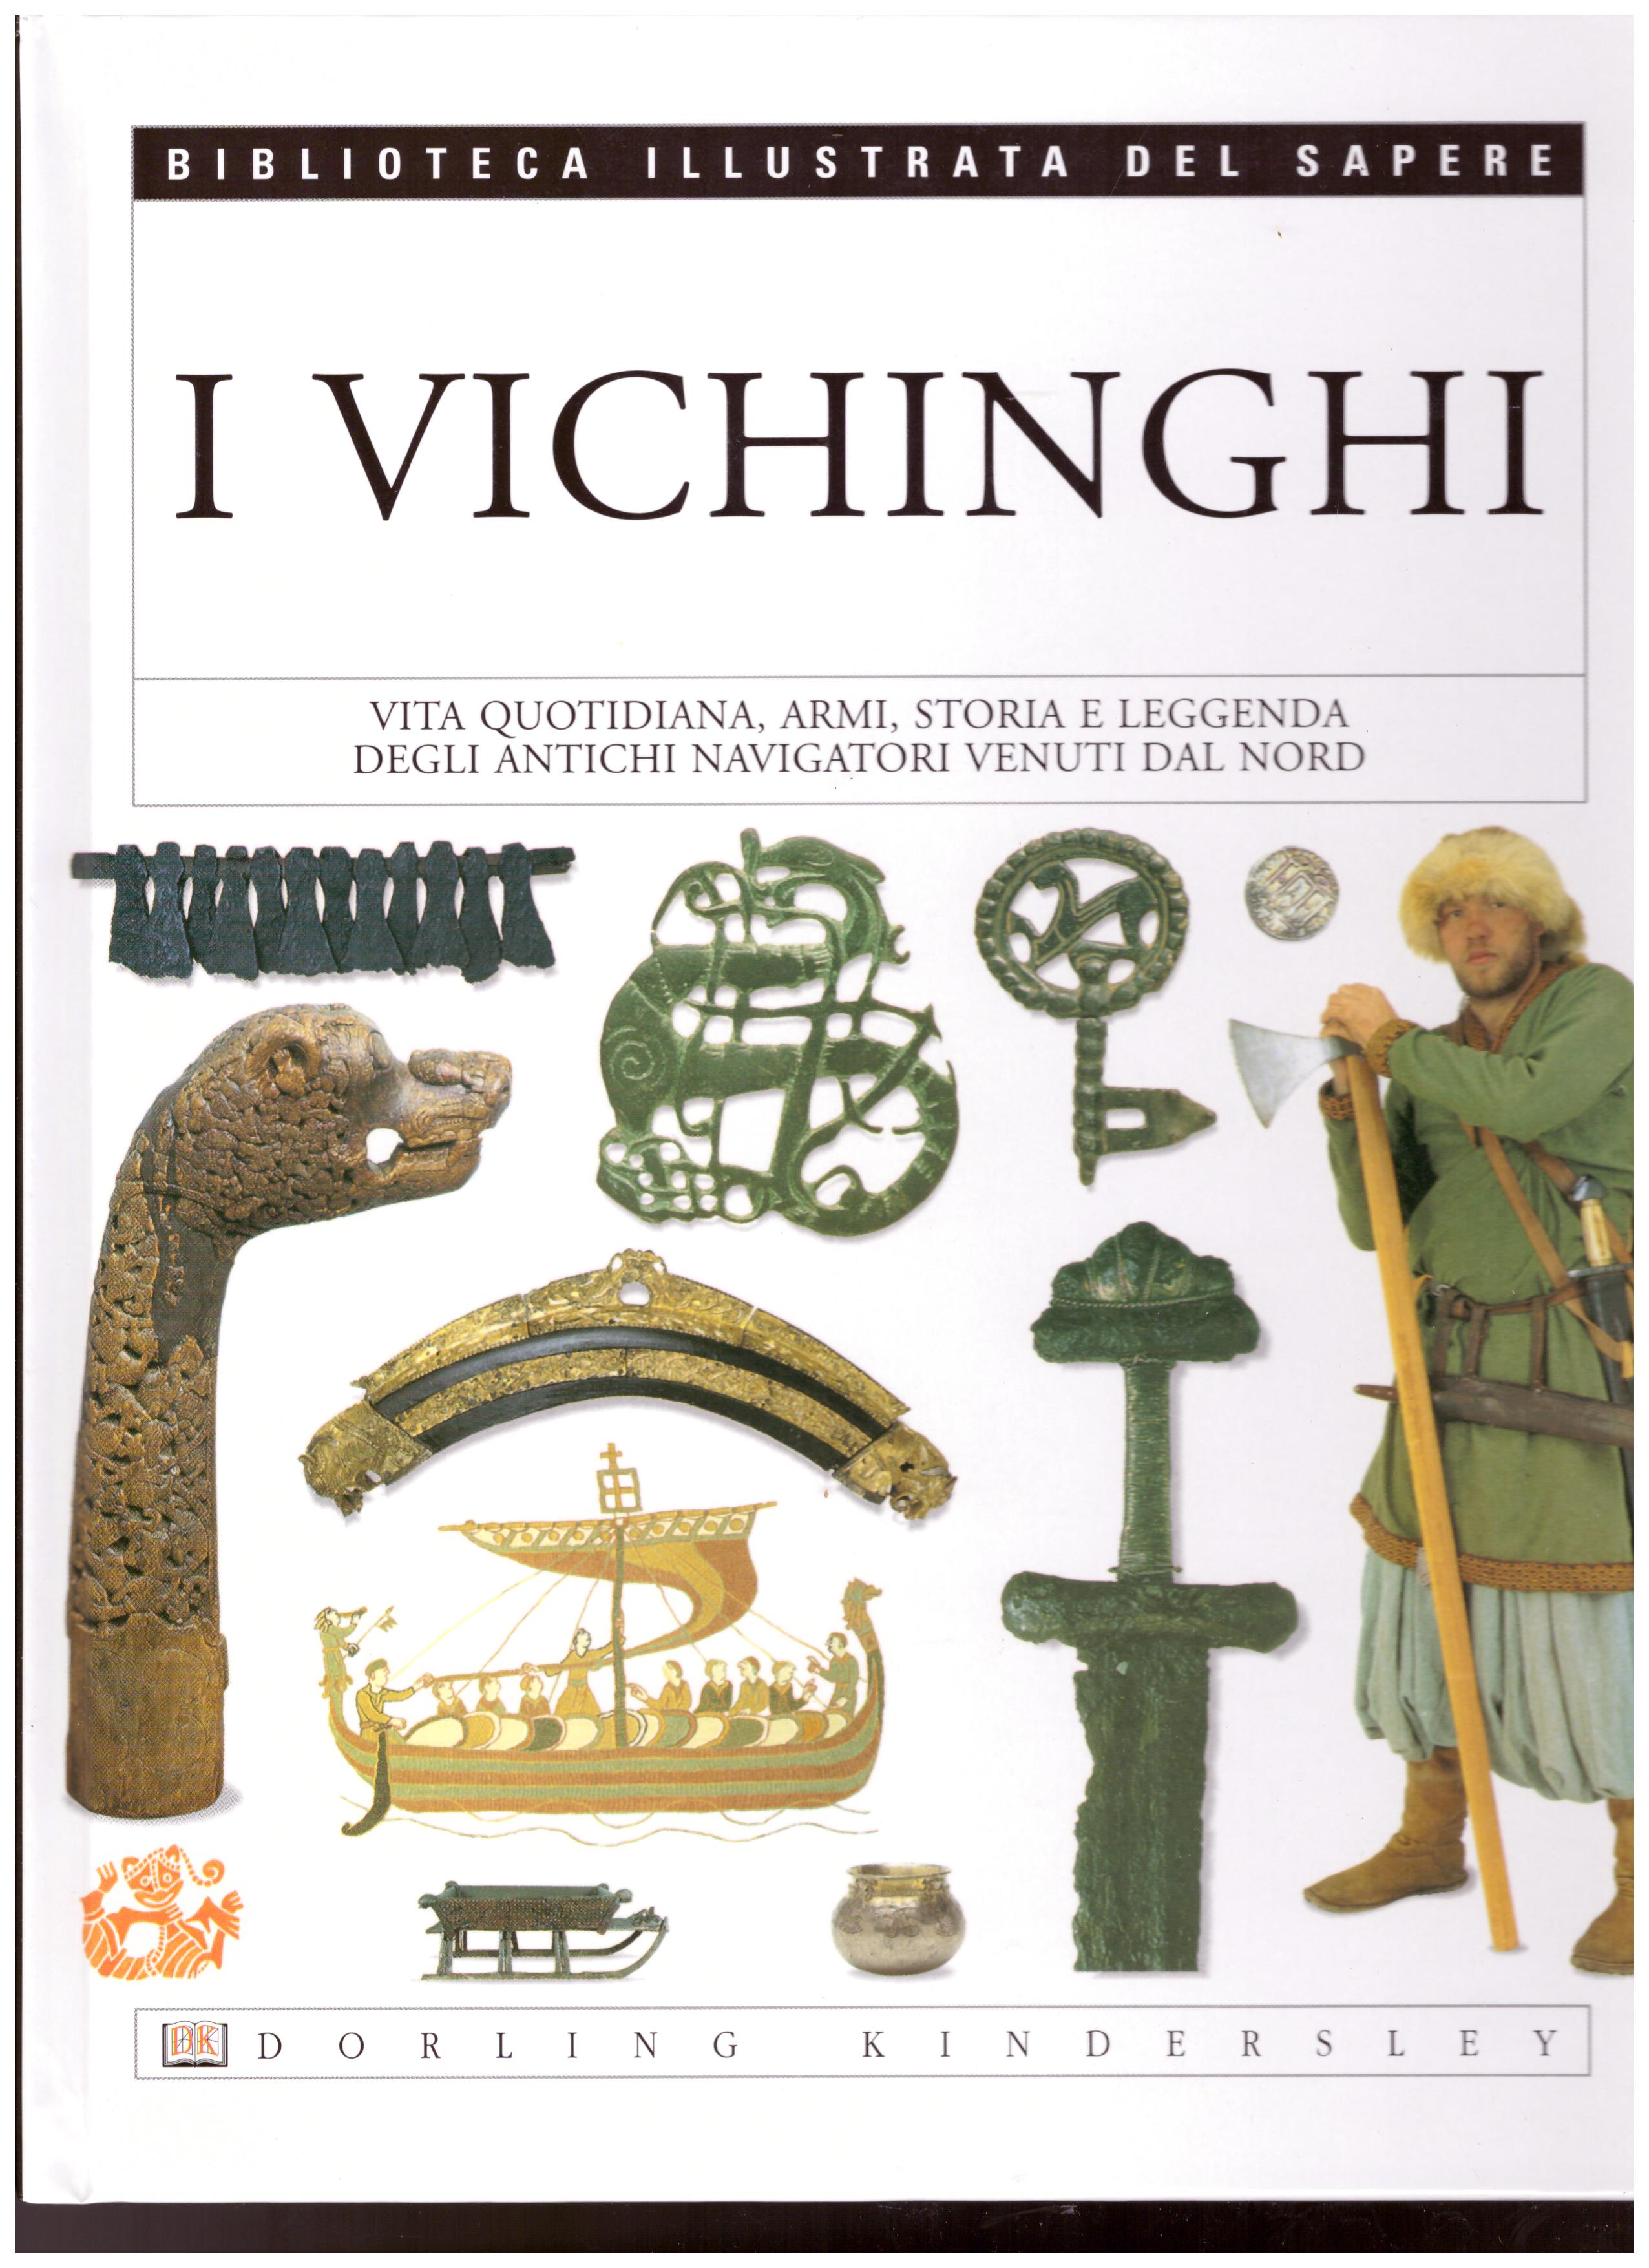 Titolo: I vichinghi N.9      Autore: AA.VV.      Editore: Dorling Kindersley, 2004